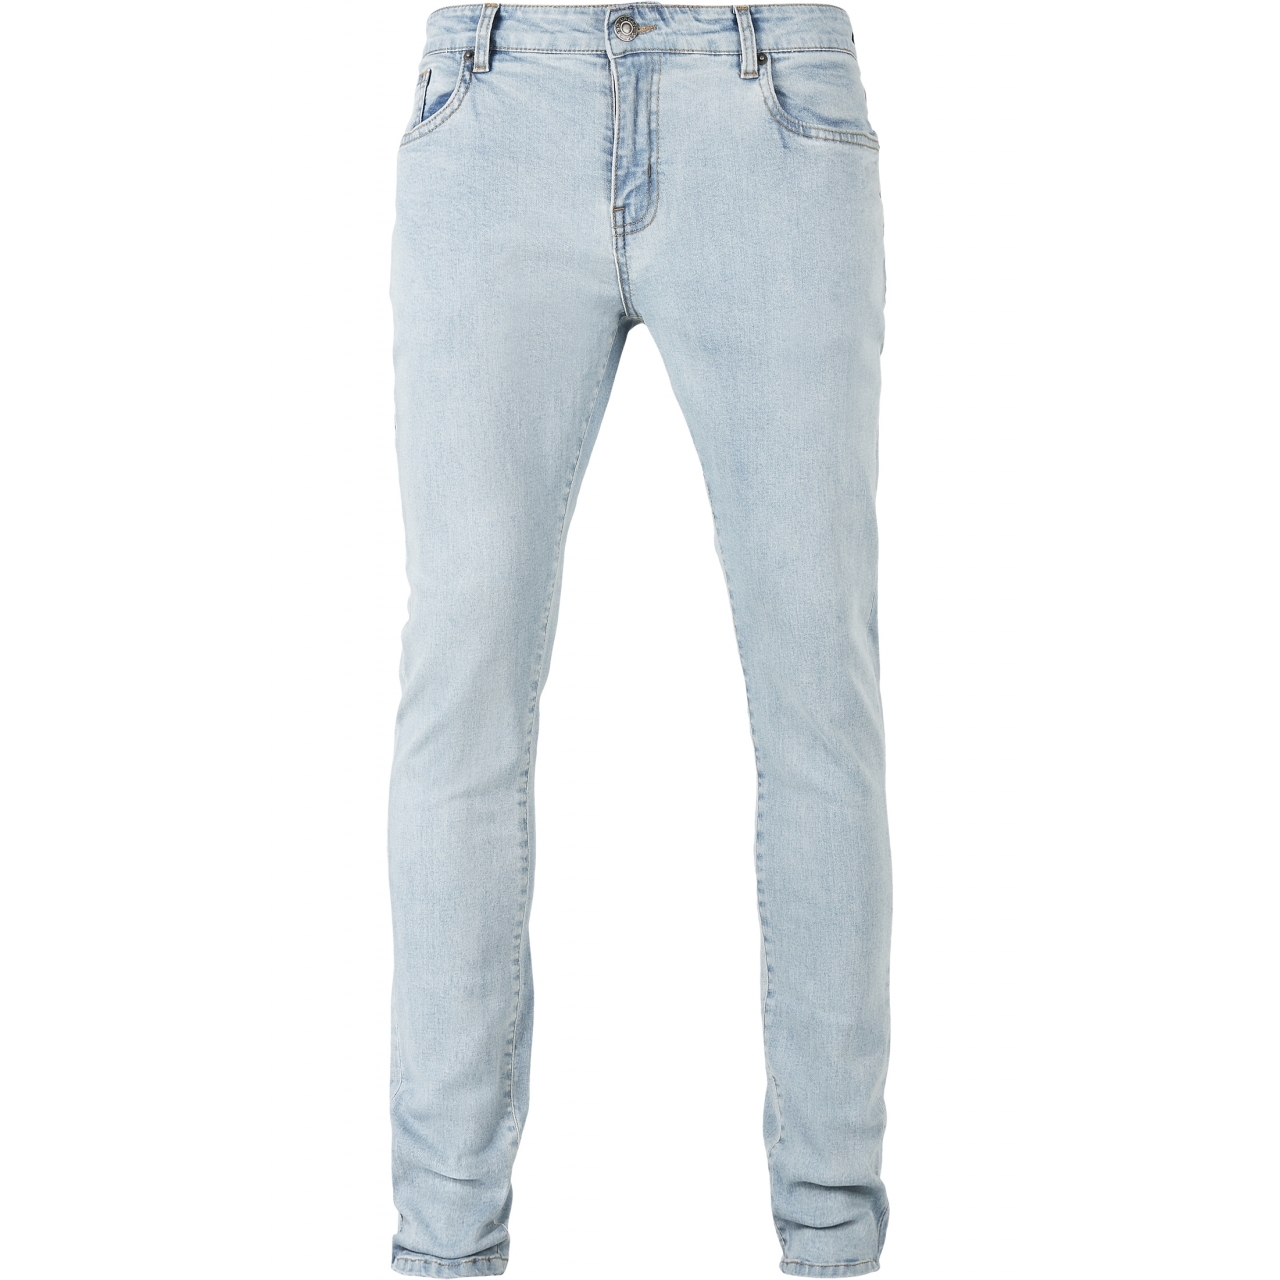 Džíny Urban Classics Slim Fit Zip Jeans - modré, 34/32